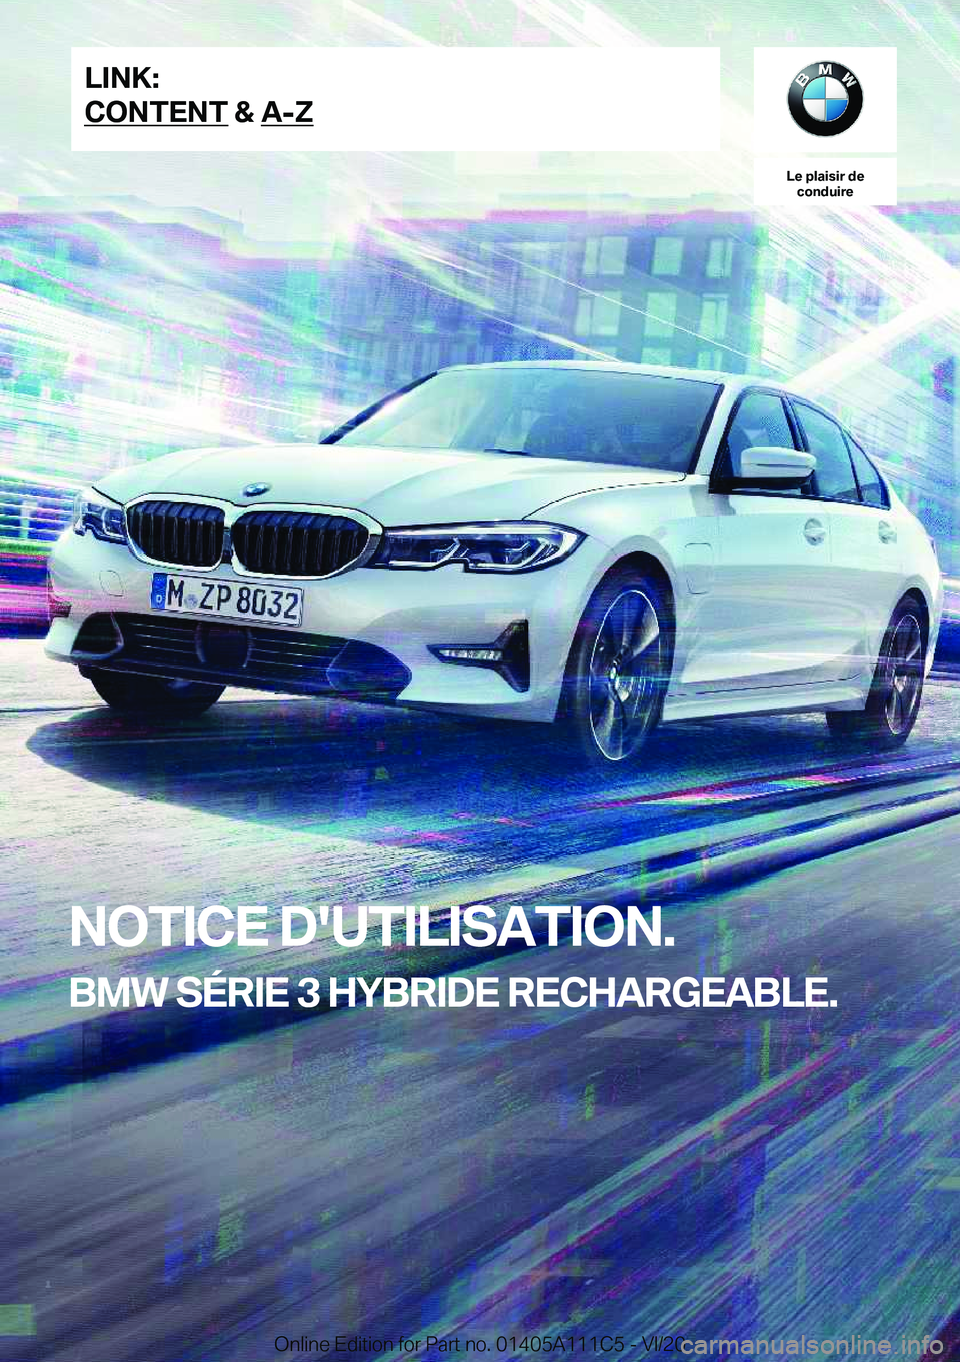 BMW 3 SERIES SEDAN PLUG-IN HYBRID 2021  Notices Demploi (in French) �L�e��p�l�a�i�s�i�r��d�e�c�o�n�d�u�i�r�e
�N�O�T�I�C�E��D�'�U�T�I�L�I�S�A�T�I�O�N�.
�B�M�W��S�